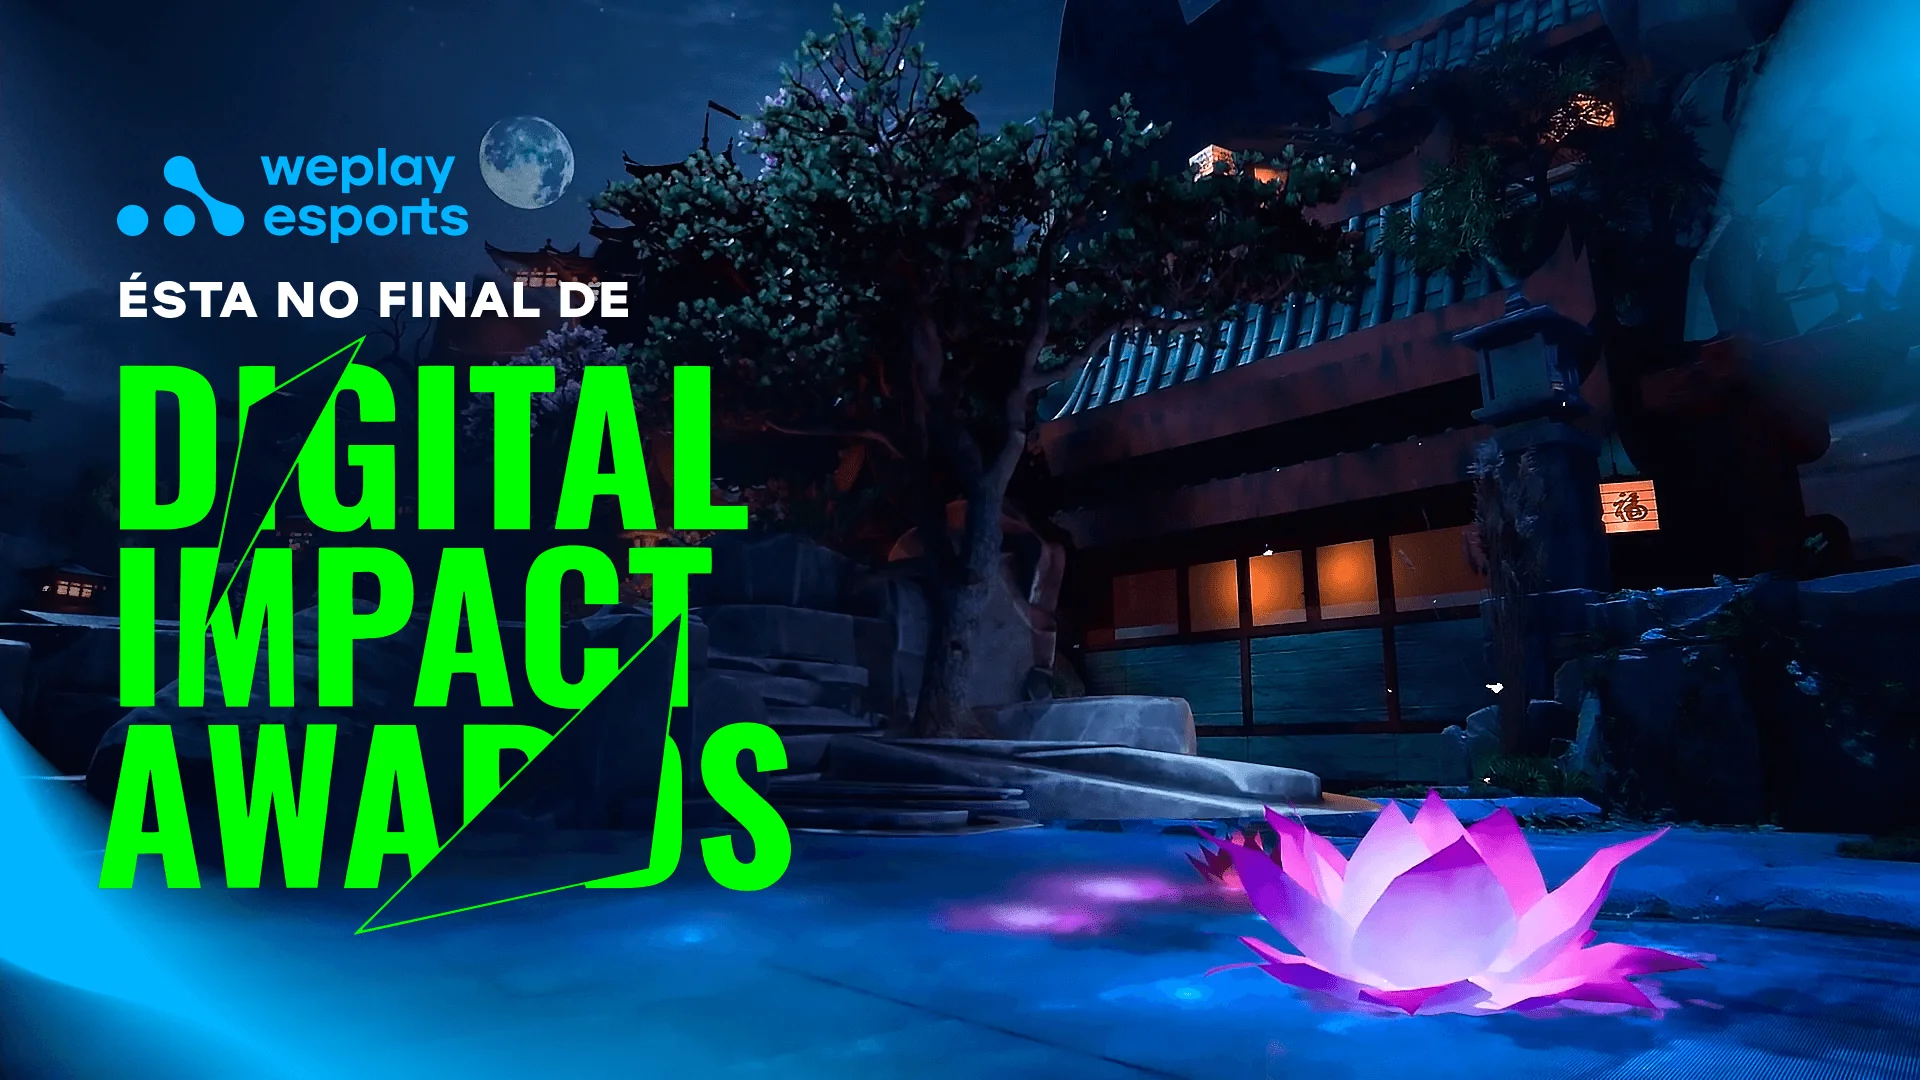 WePlay Esports está no final de Digital Impact Awards. Imagem: WePlay Holding